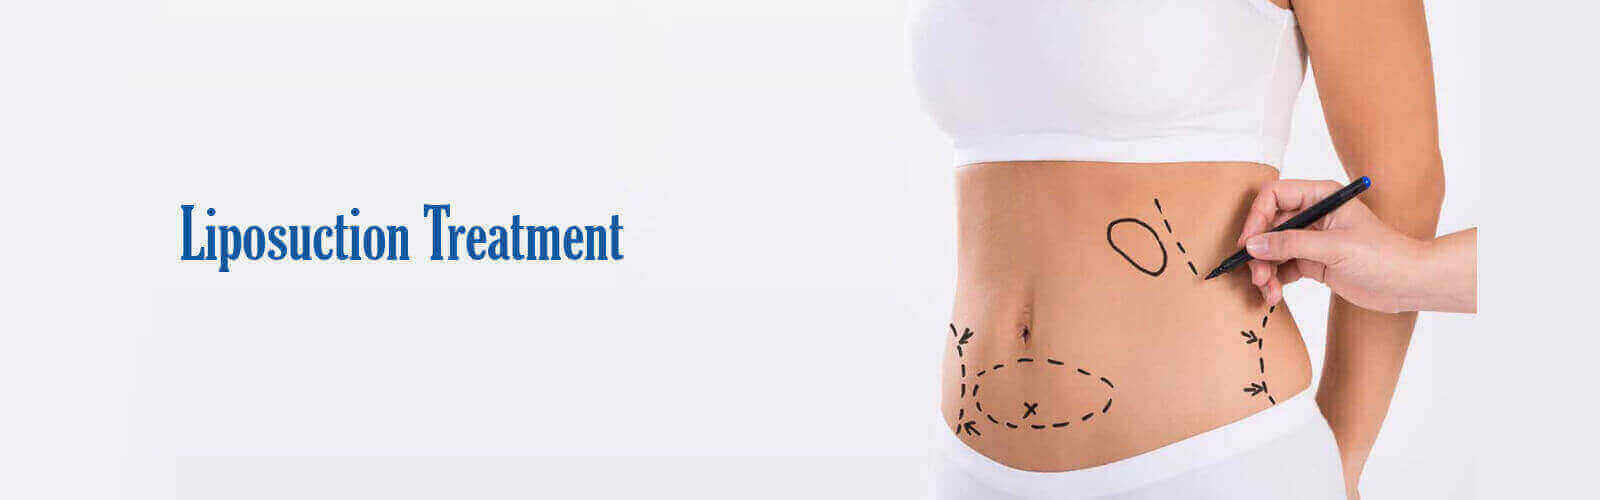 Liposuction Treatment in Turkey